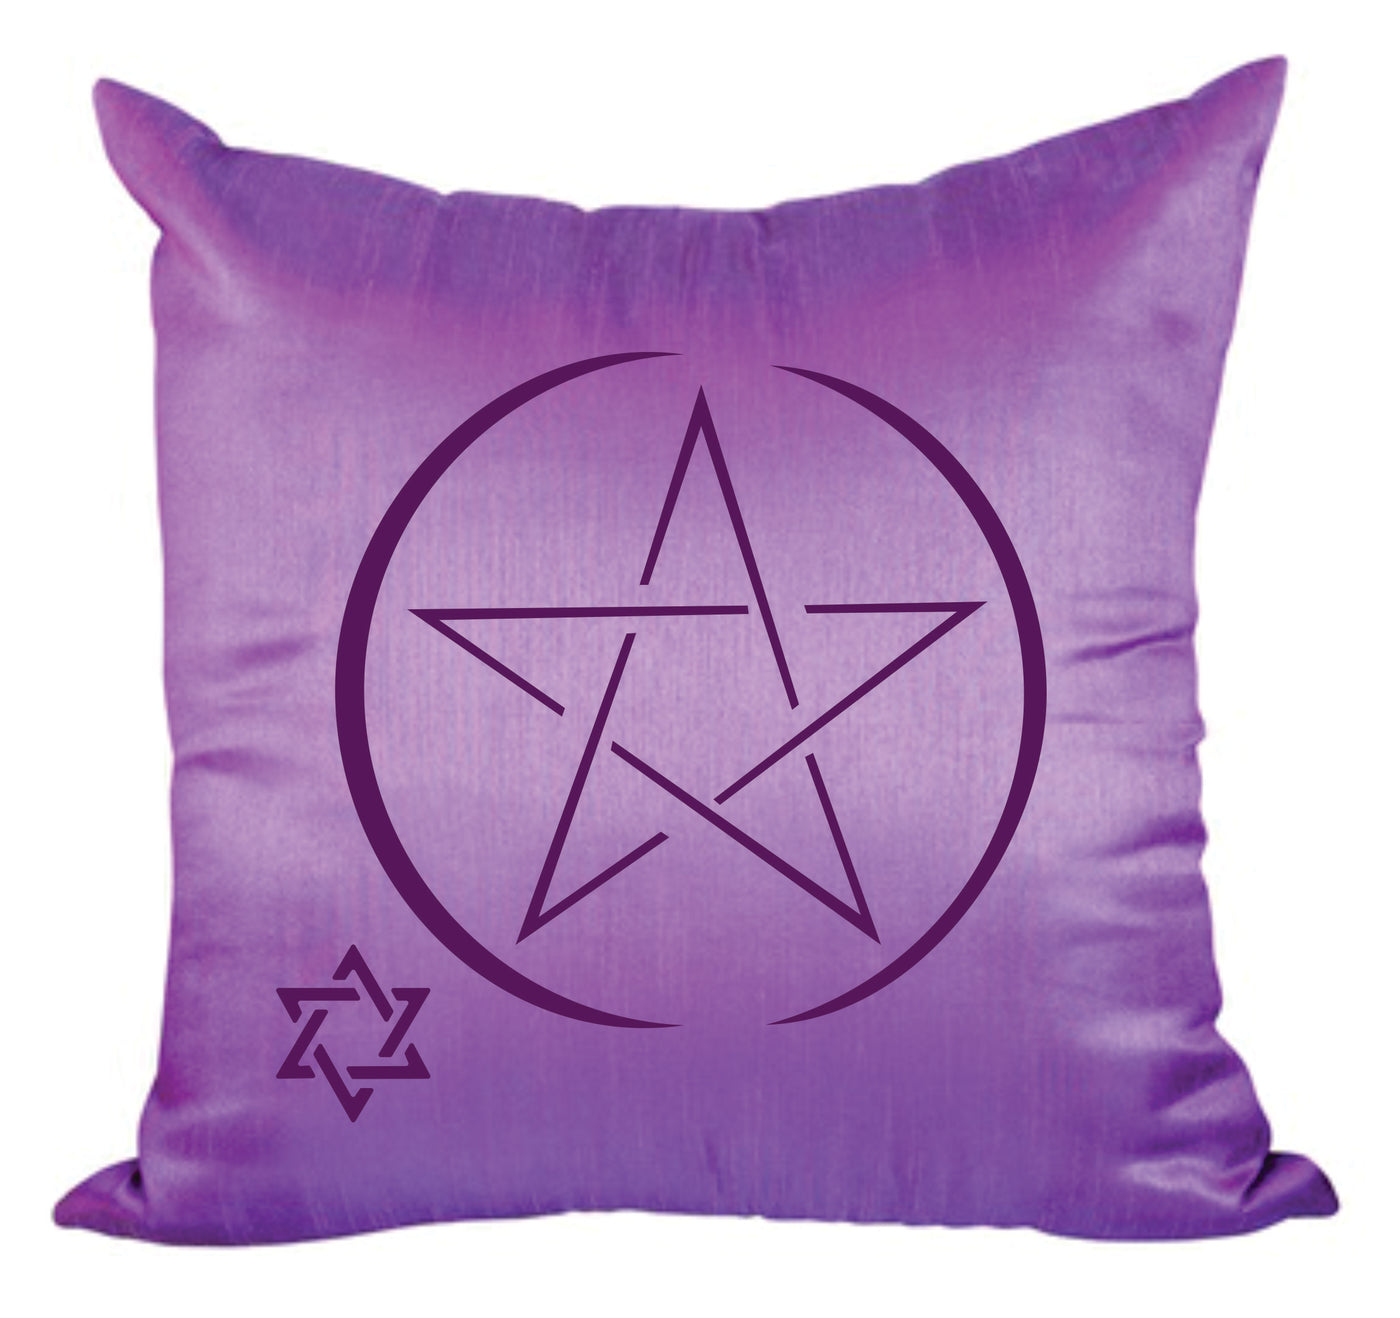 Star of David Stencil - Jewish Hebrew Magen David Sign Symbol